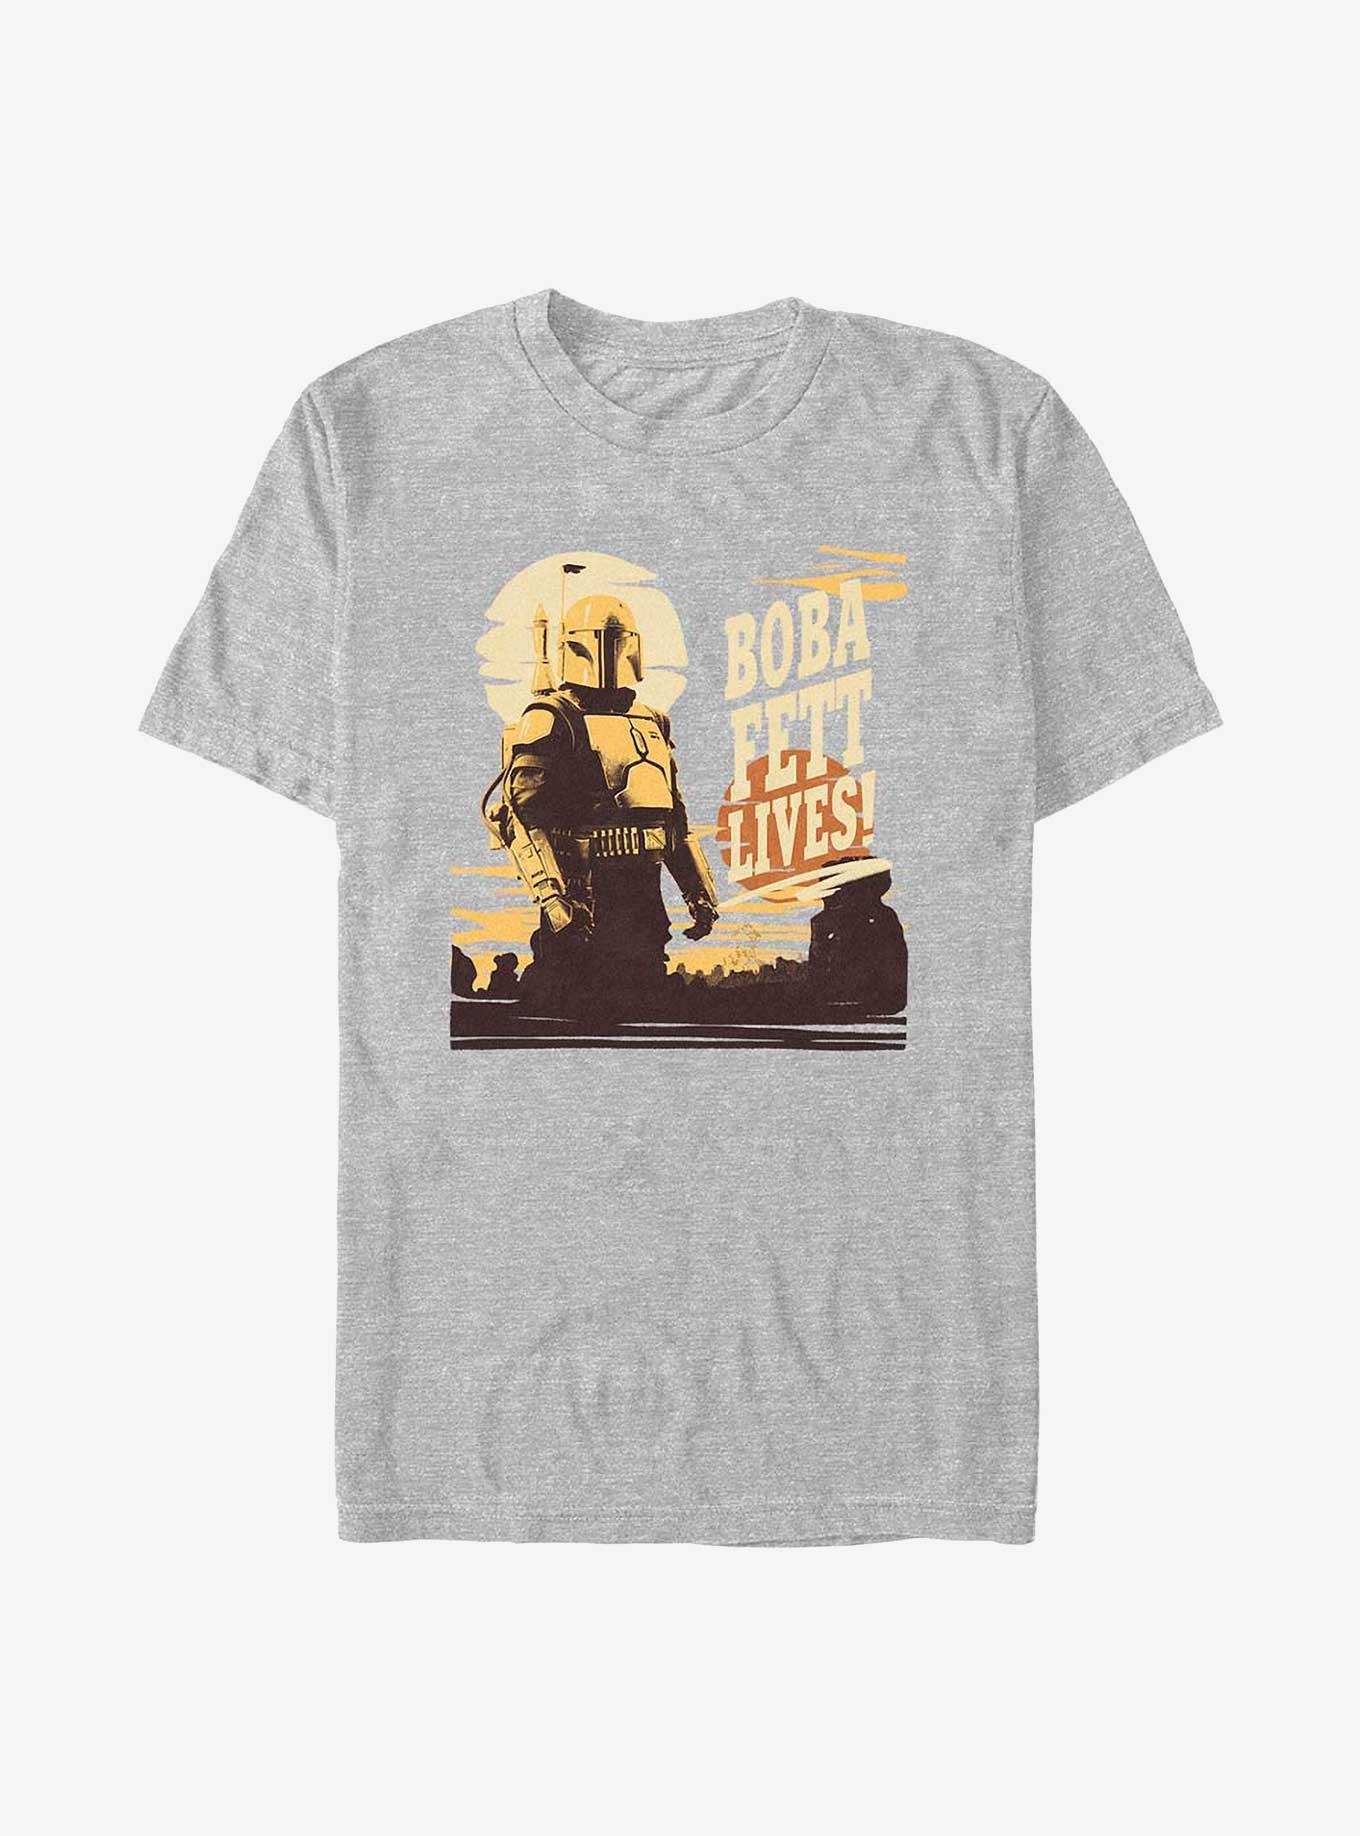 Star Wars The Book Of Boba Fett Lives T-Shirt